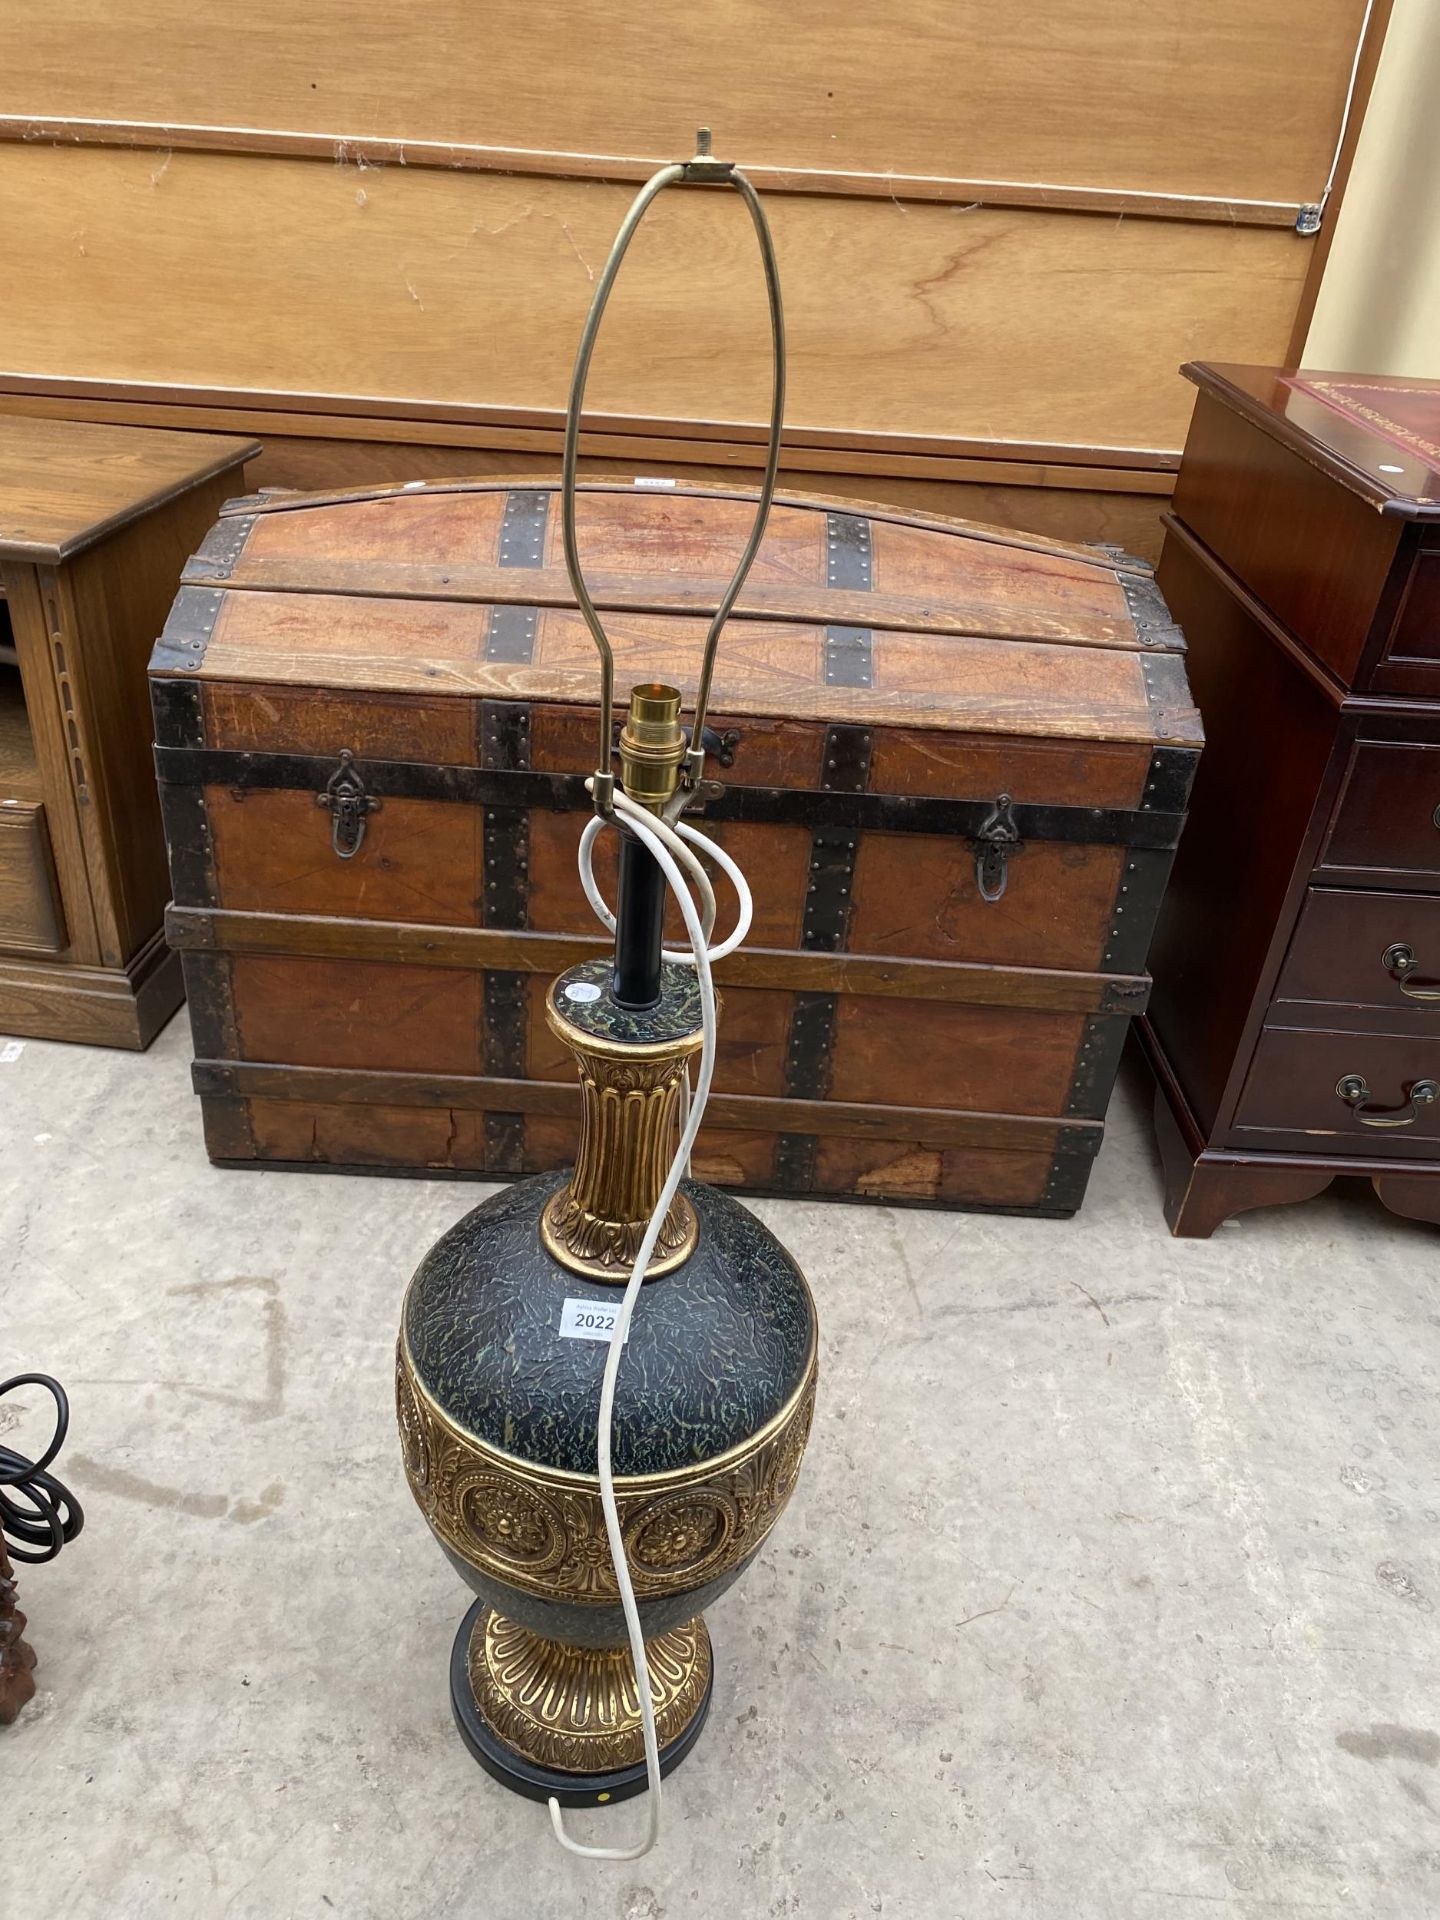 A LARGE DECORATIVE CERAMIC TABLE LAMP